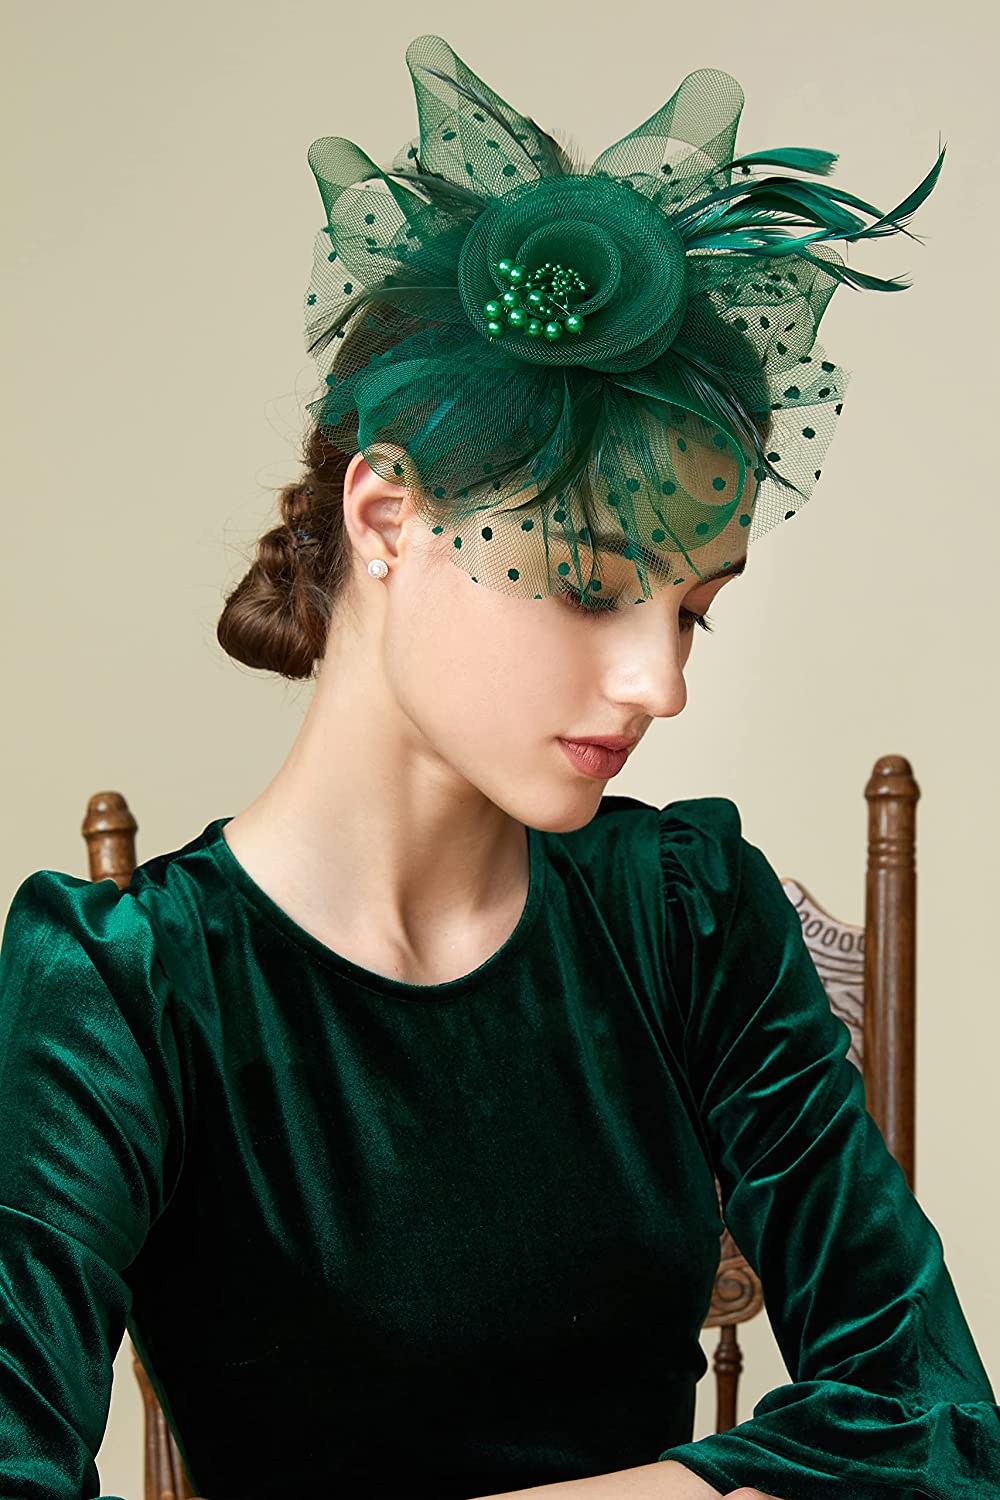 Premium Wedding Fascinators Feathers Hat